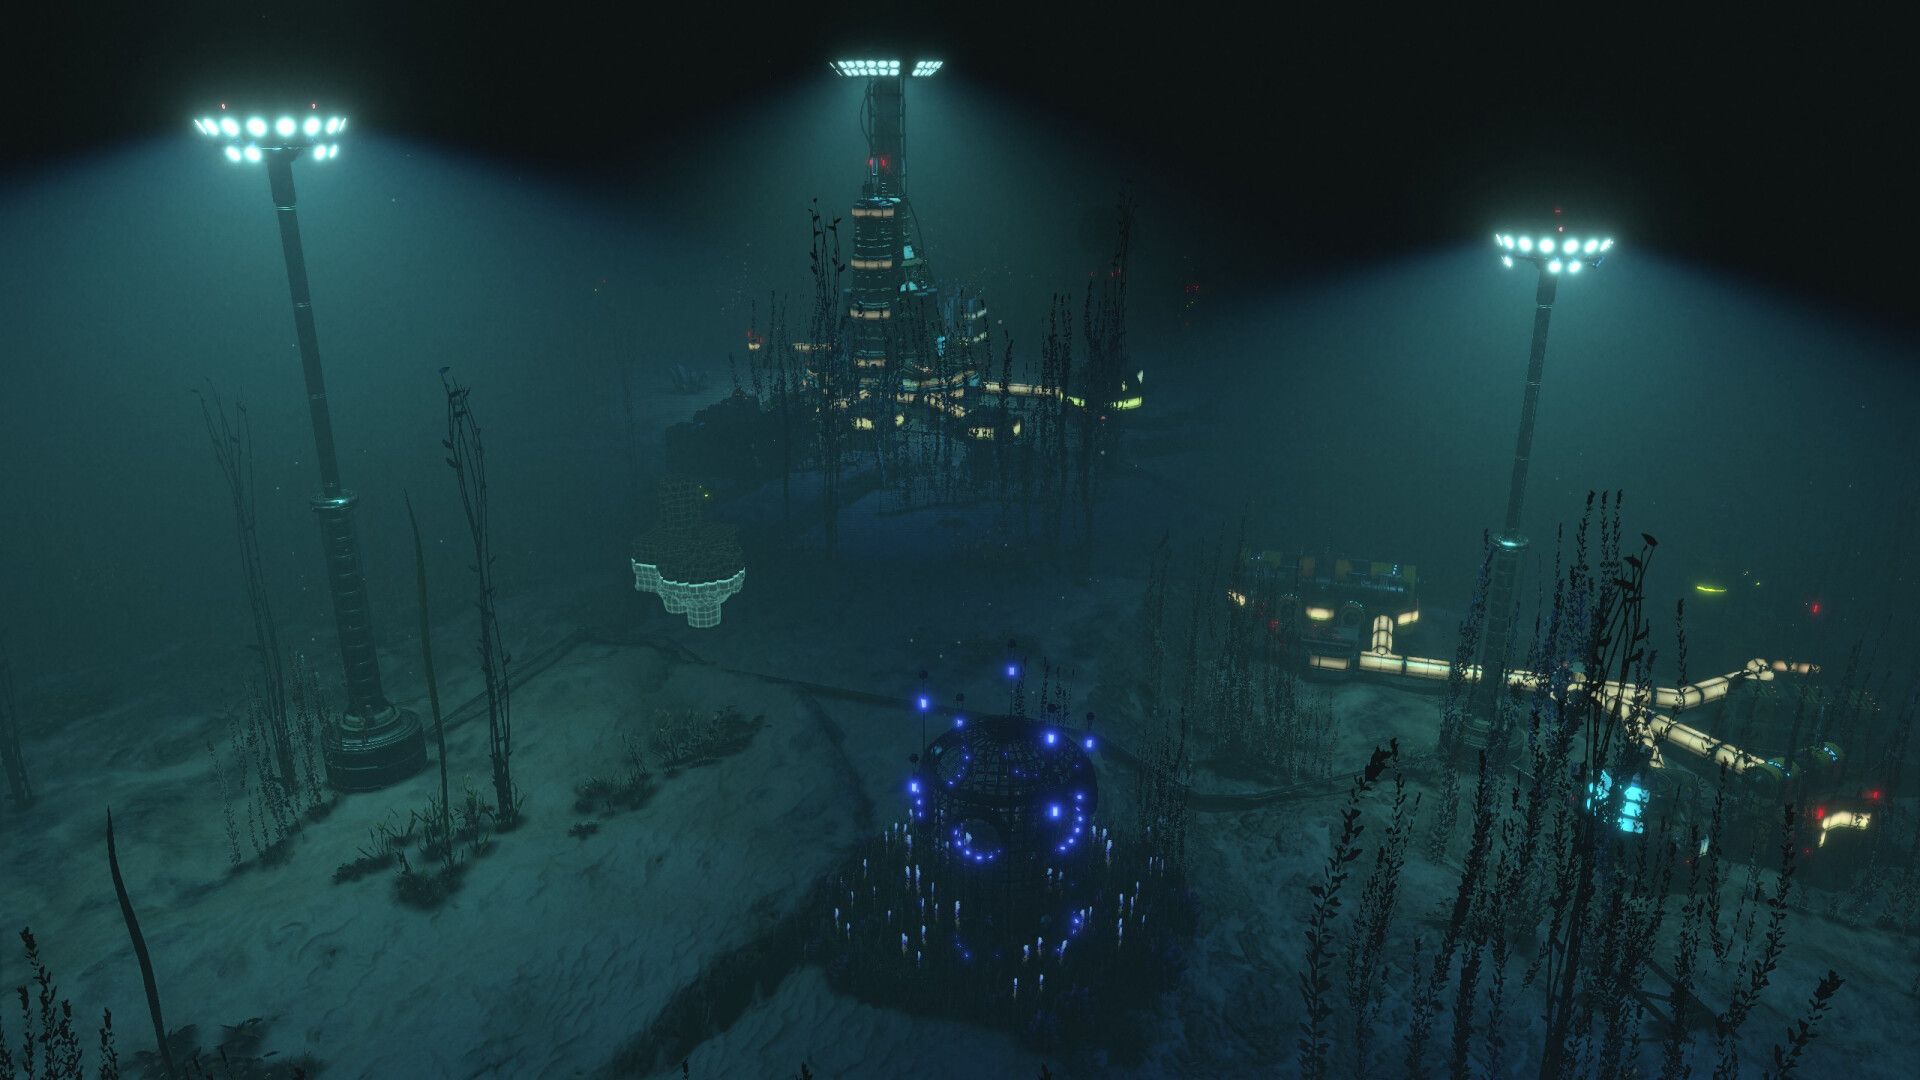 Deep Ocean Rush on Steam